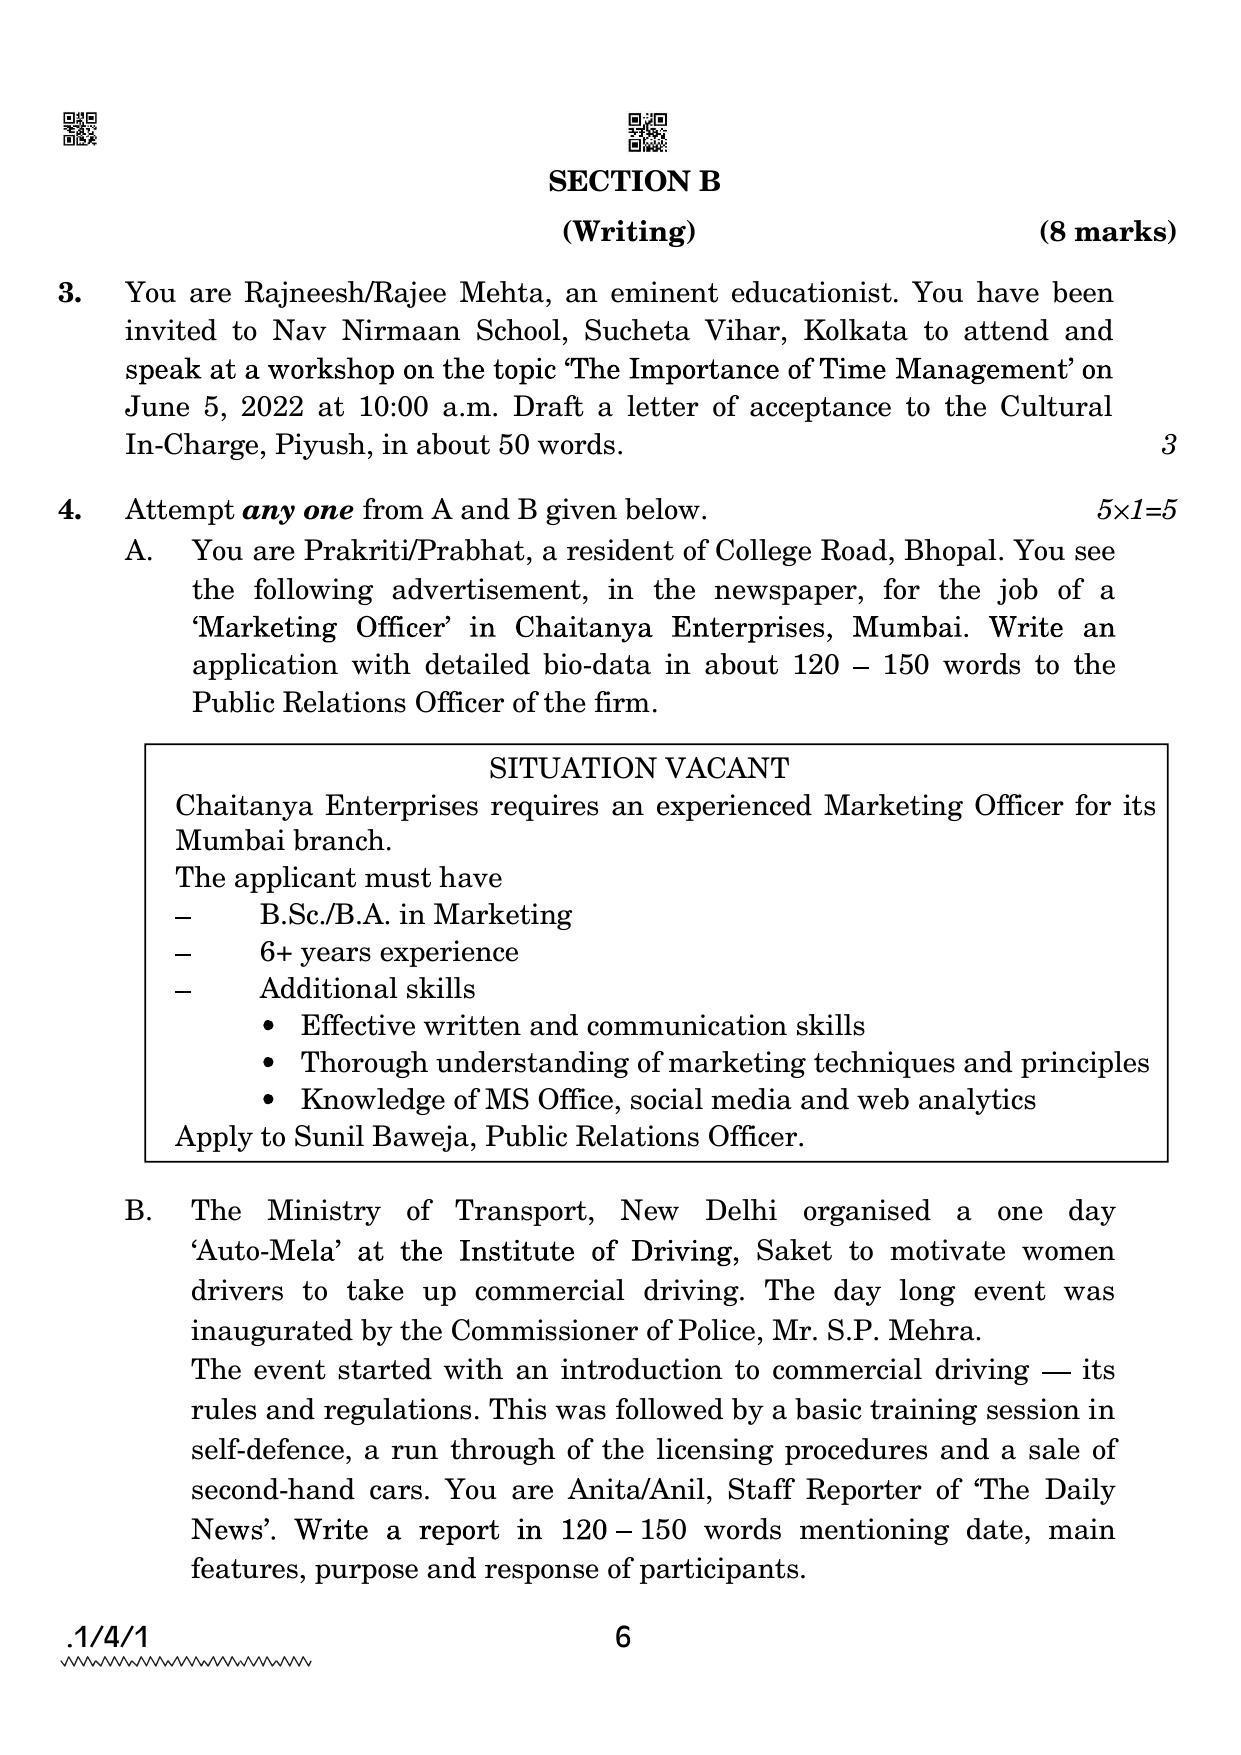 CBSE Class 12 1-4-1 English Core 2022 Question Paper - Page 6